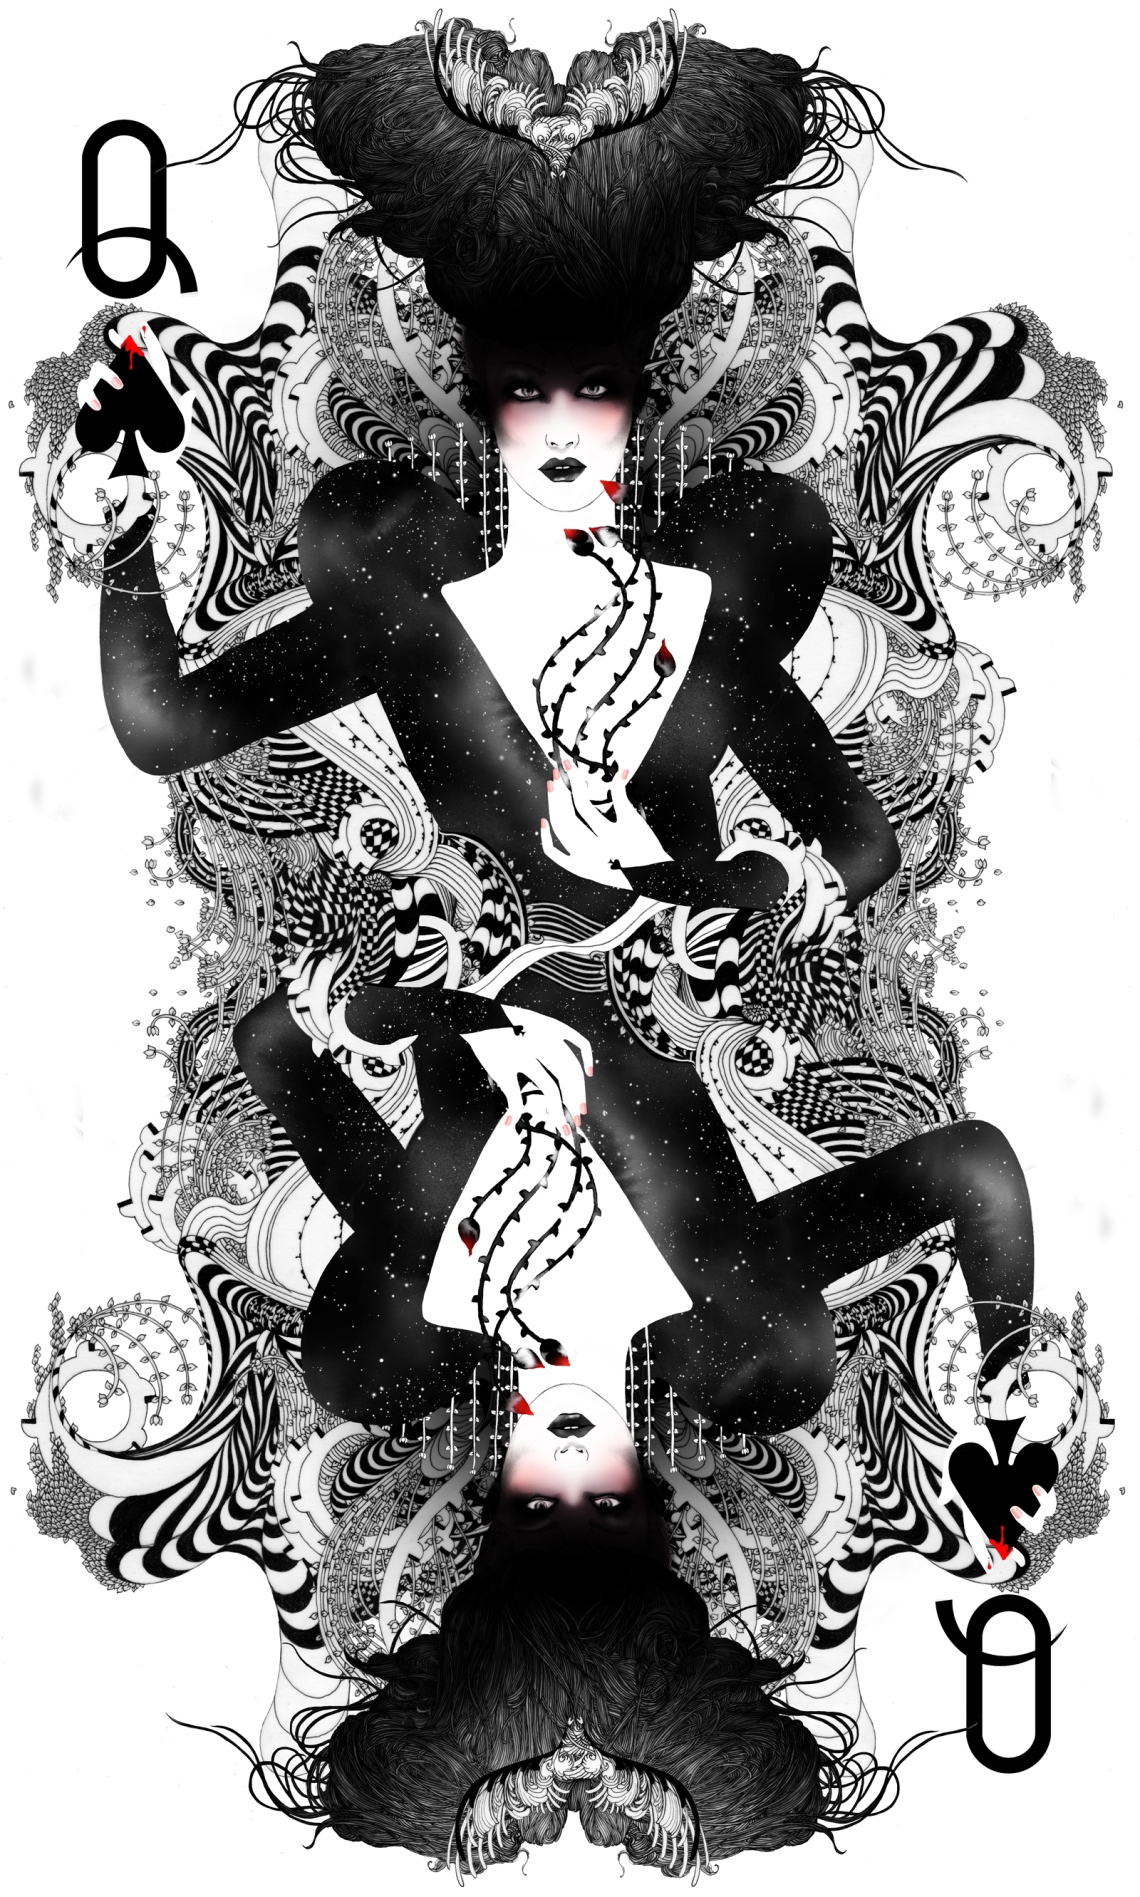 the #queen of #spades by #noumeda #wia #award #illustration #2015